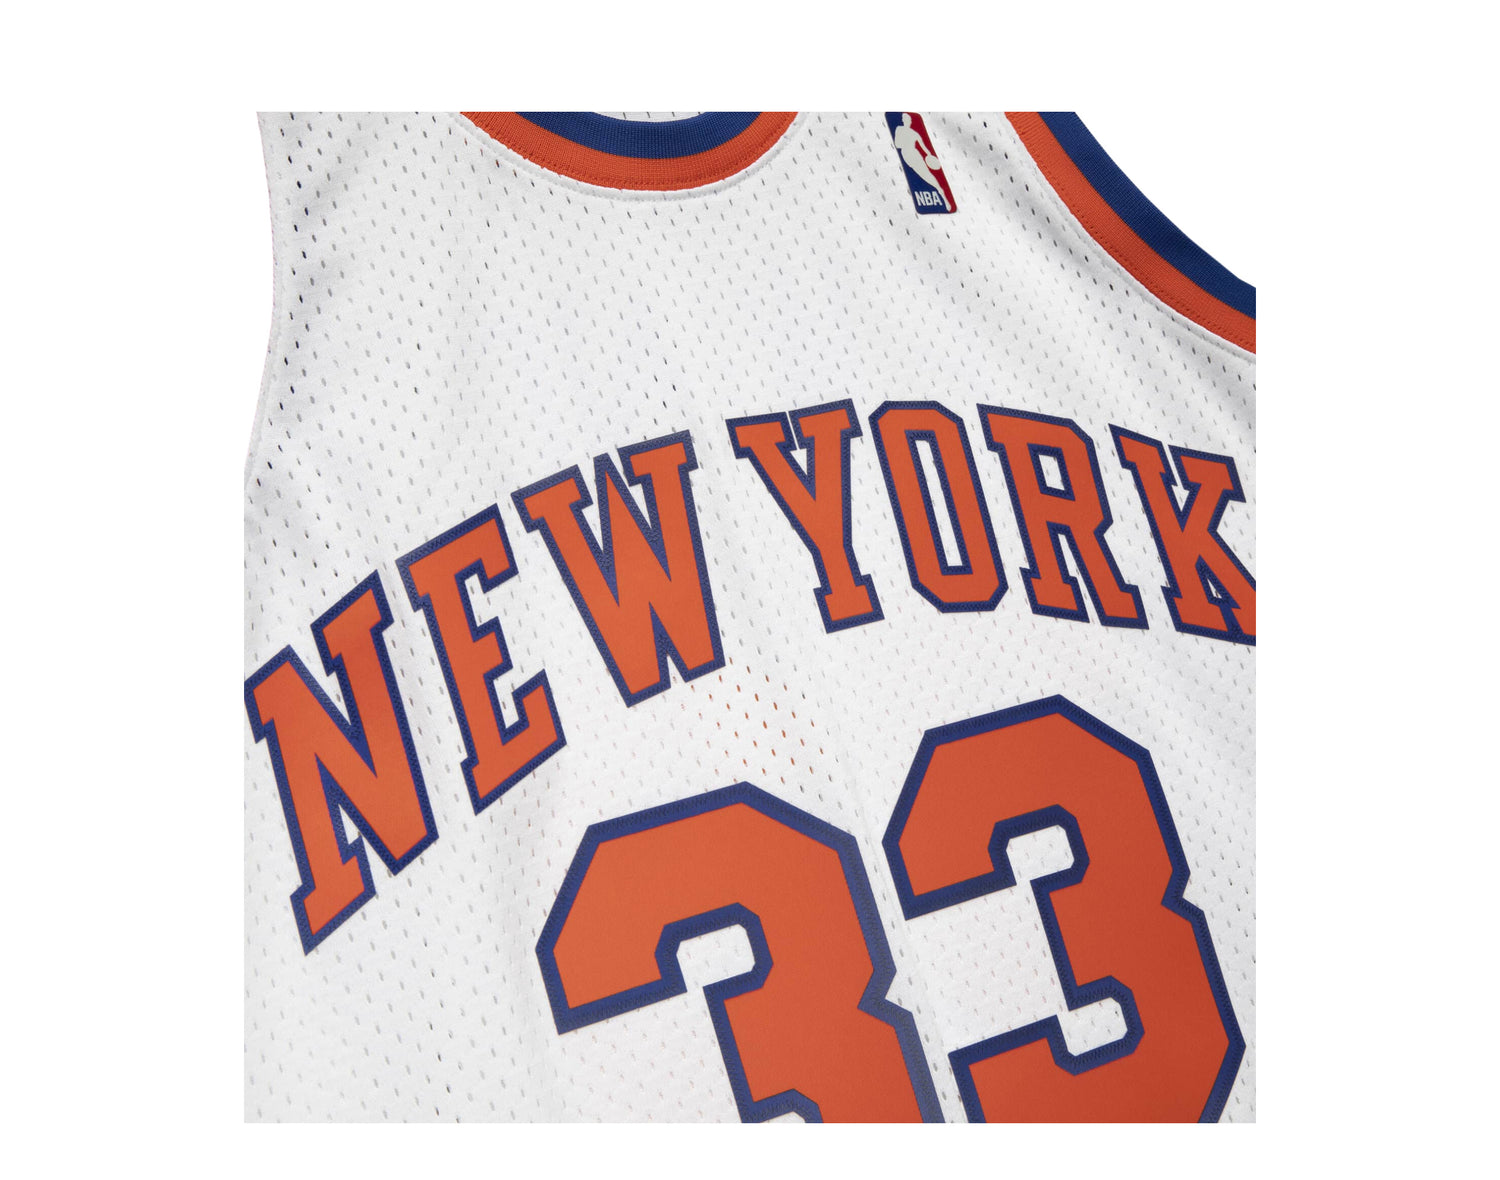 Mitchell & Ness NBA Swingman New York Knicks Home 1985-86 Patrick Ewing Men's Jersey